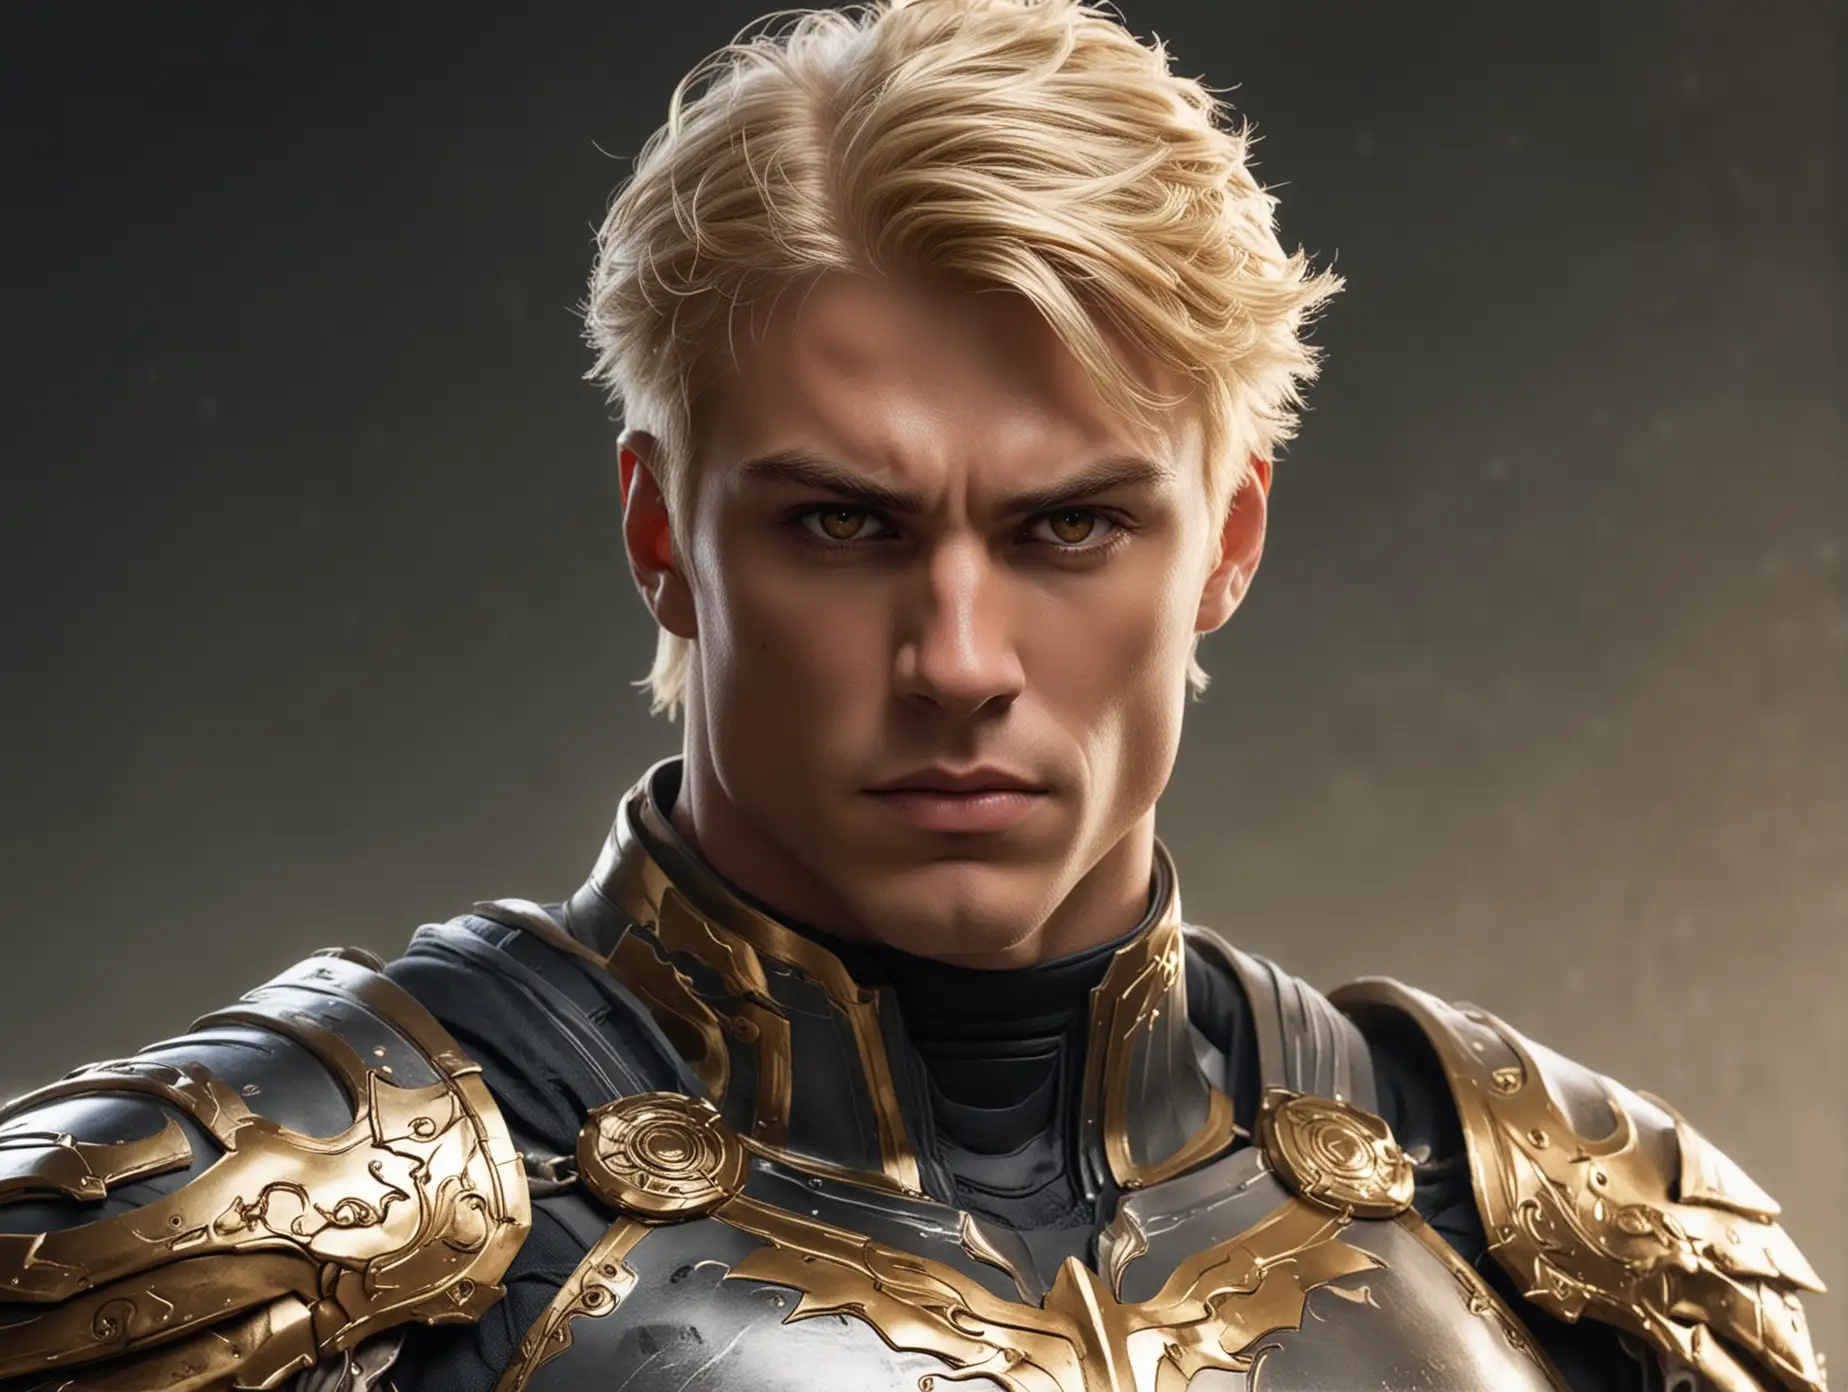 Blonde Muscular Superhuman Man in Golden Armor